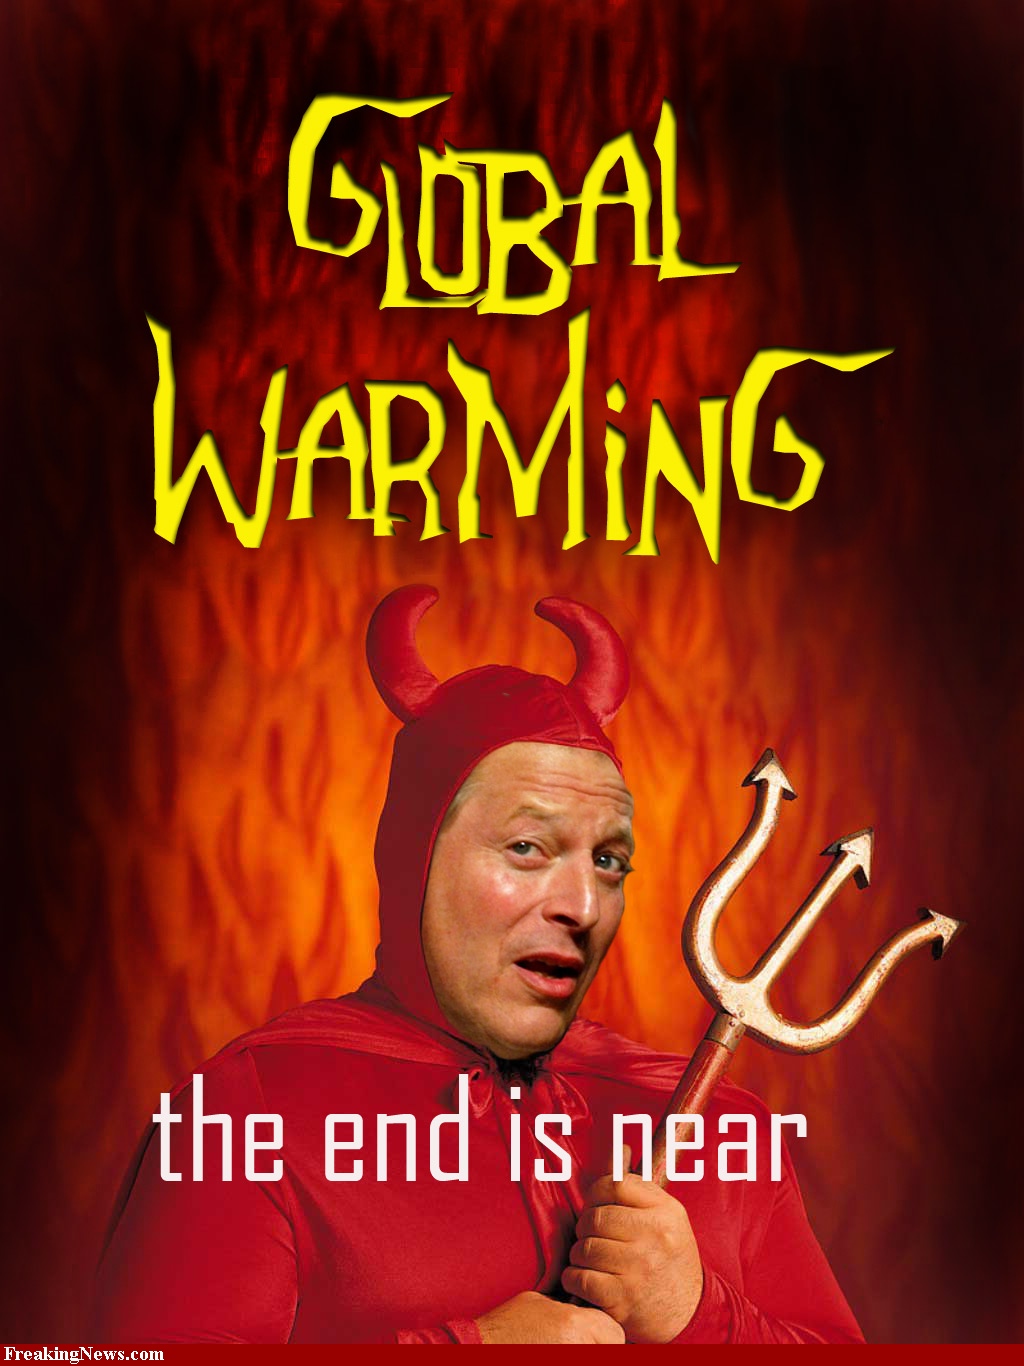 19th Ward Chicago: Global Warming?